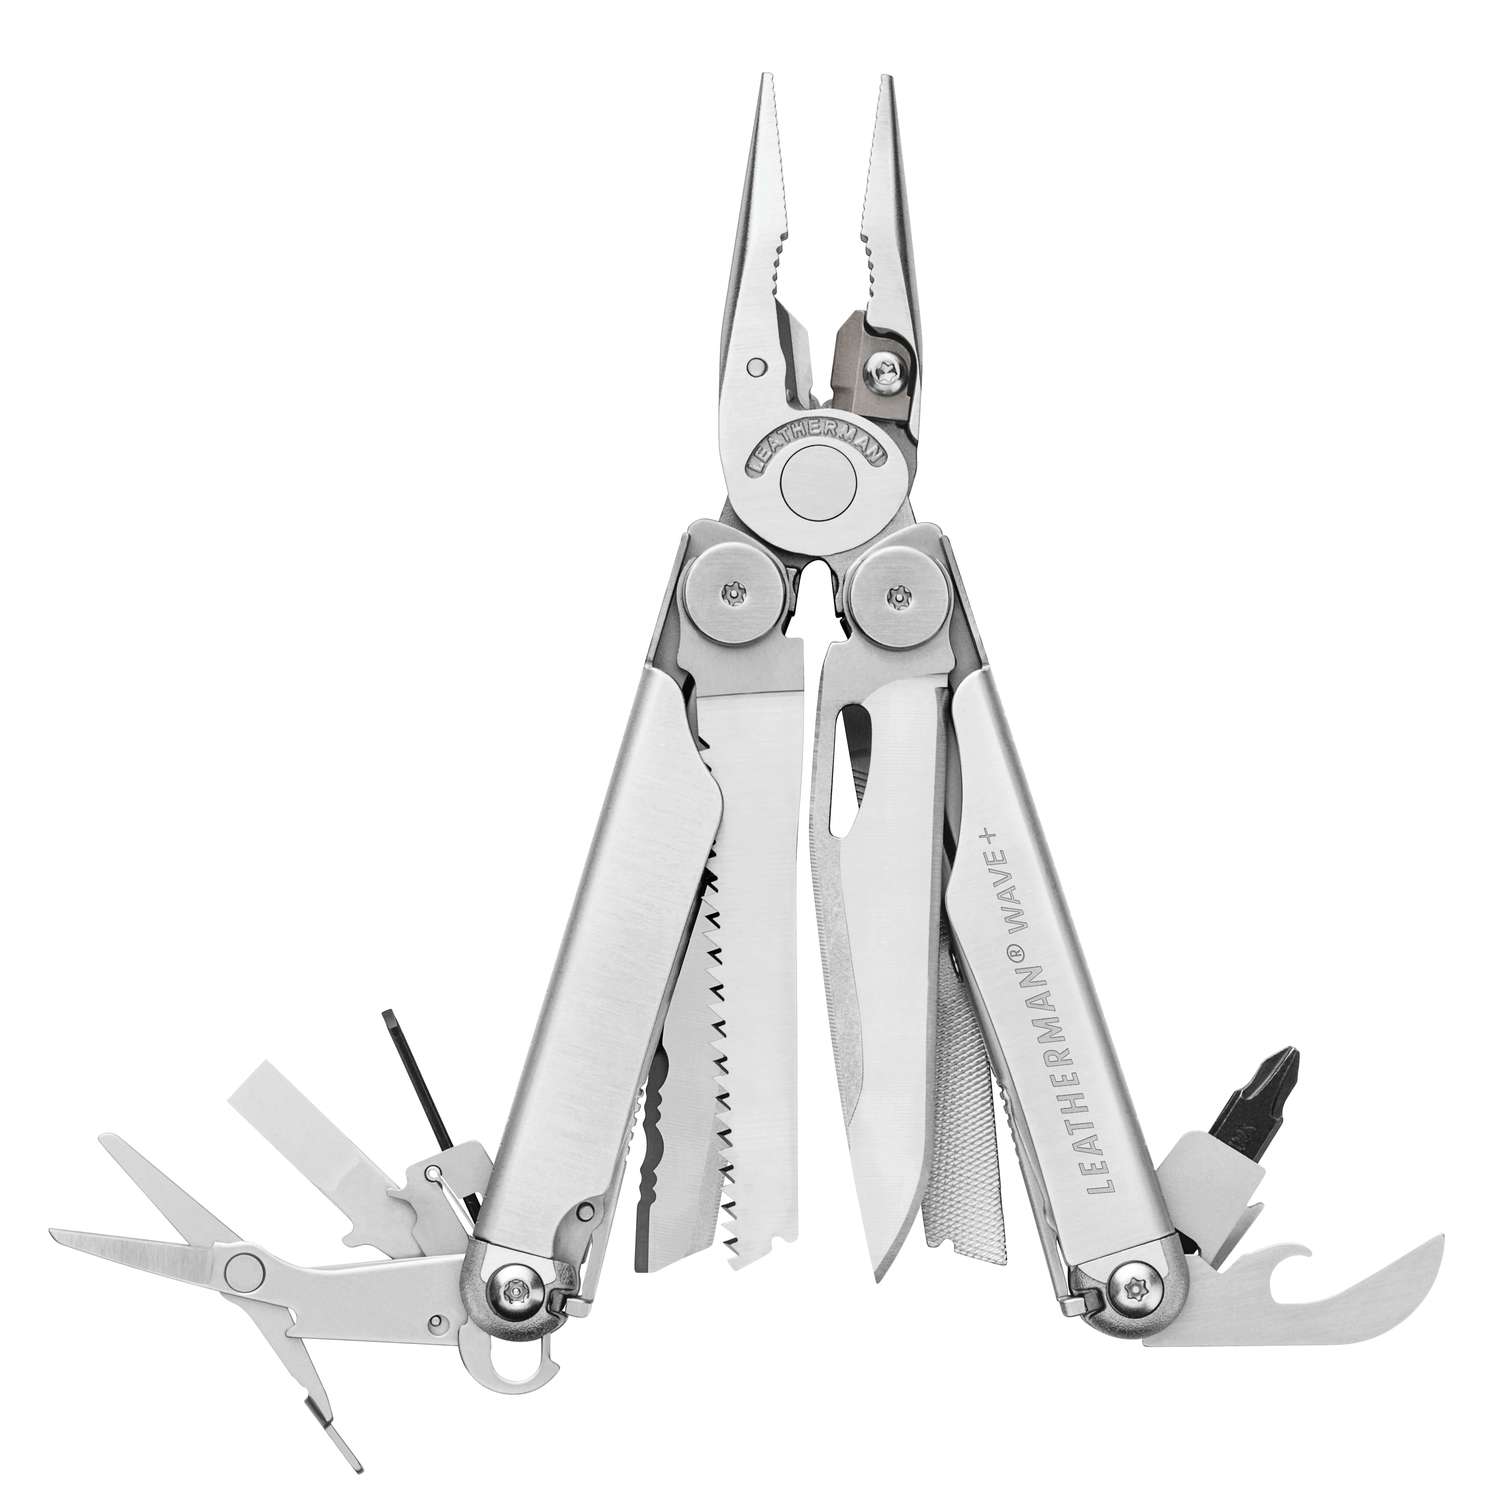 etc scissor Original Leatherman Wave: 1 Part for repairs or mods- knife plier 